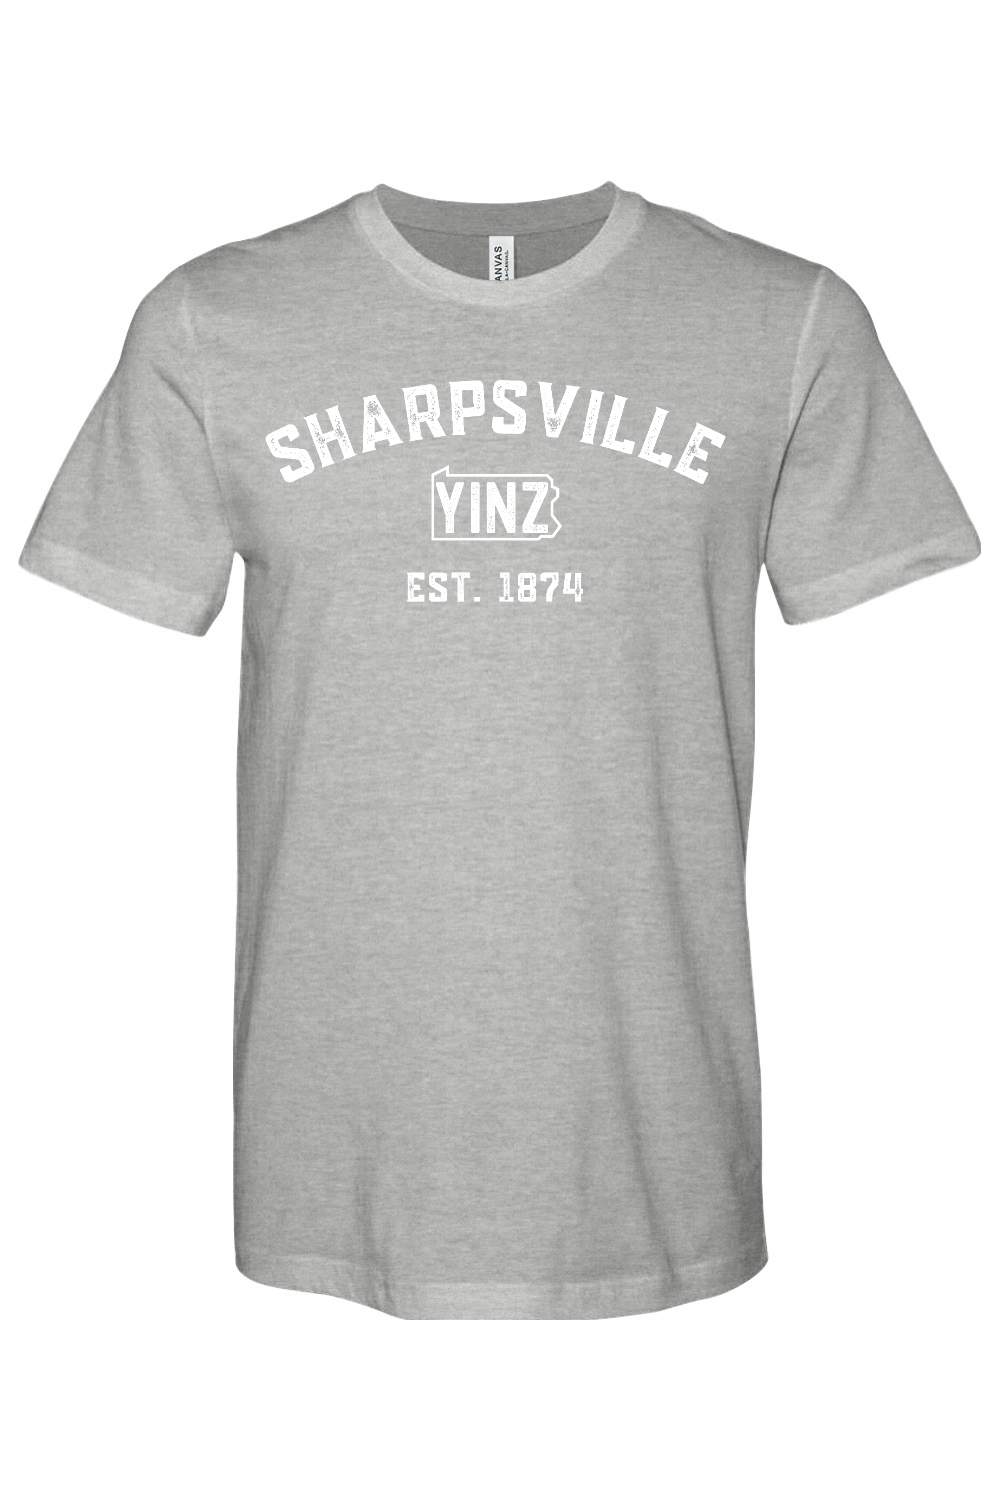 Sharpsville Yinzylvania - Yinzylvania